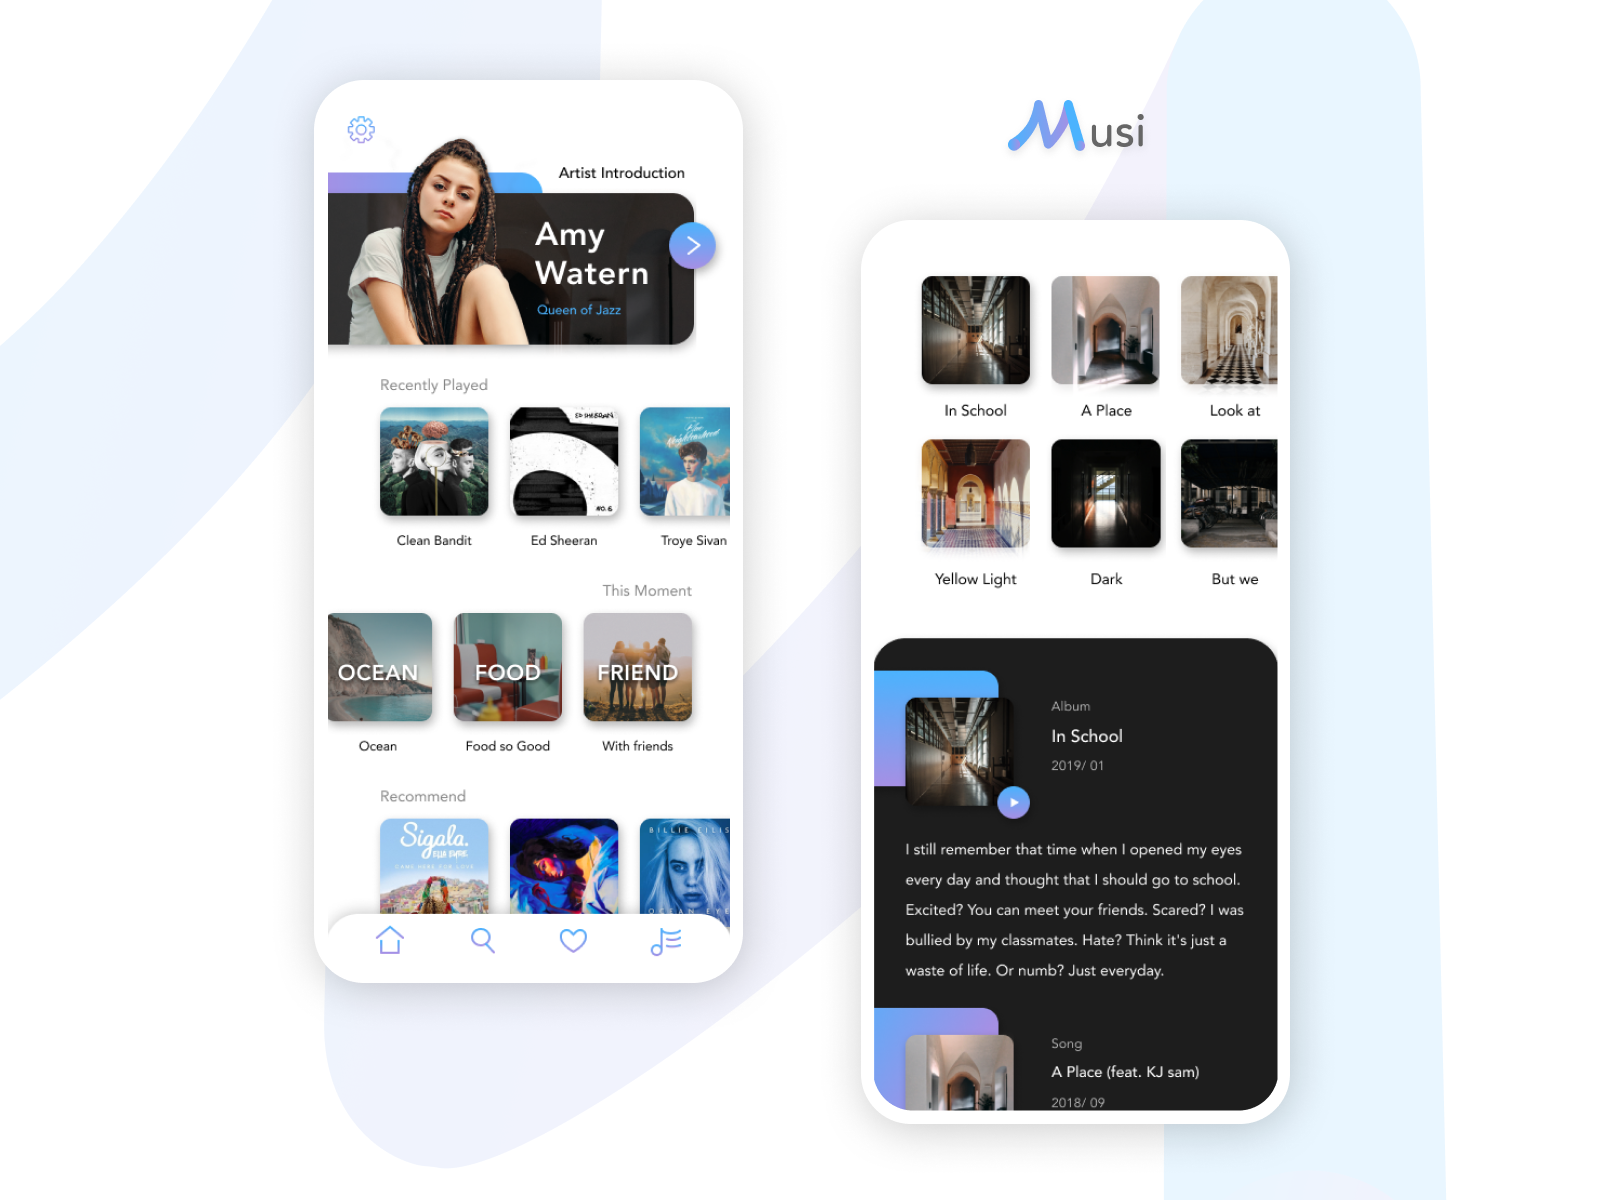 musi app images